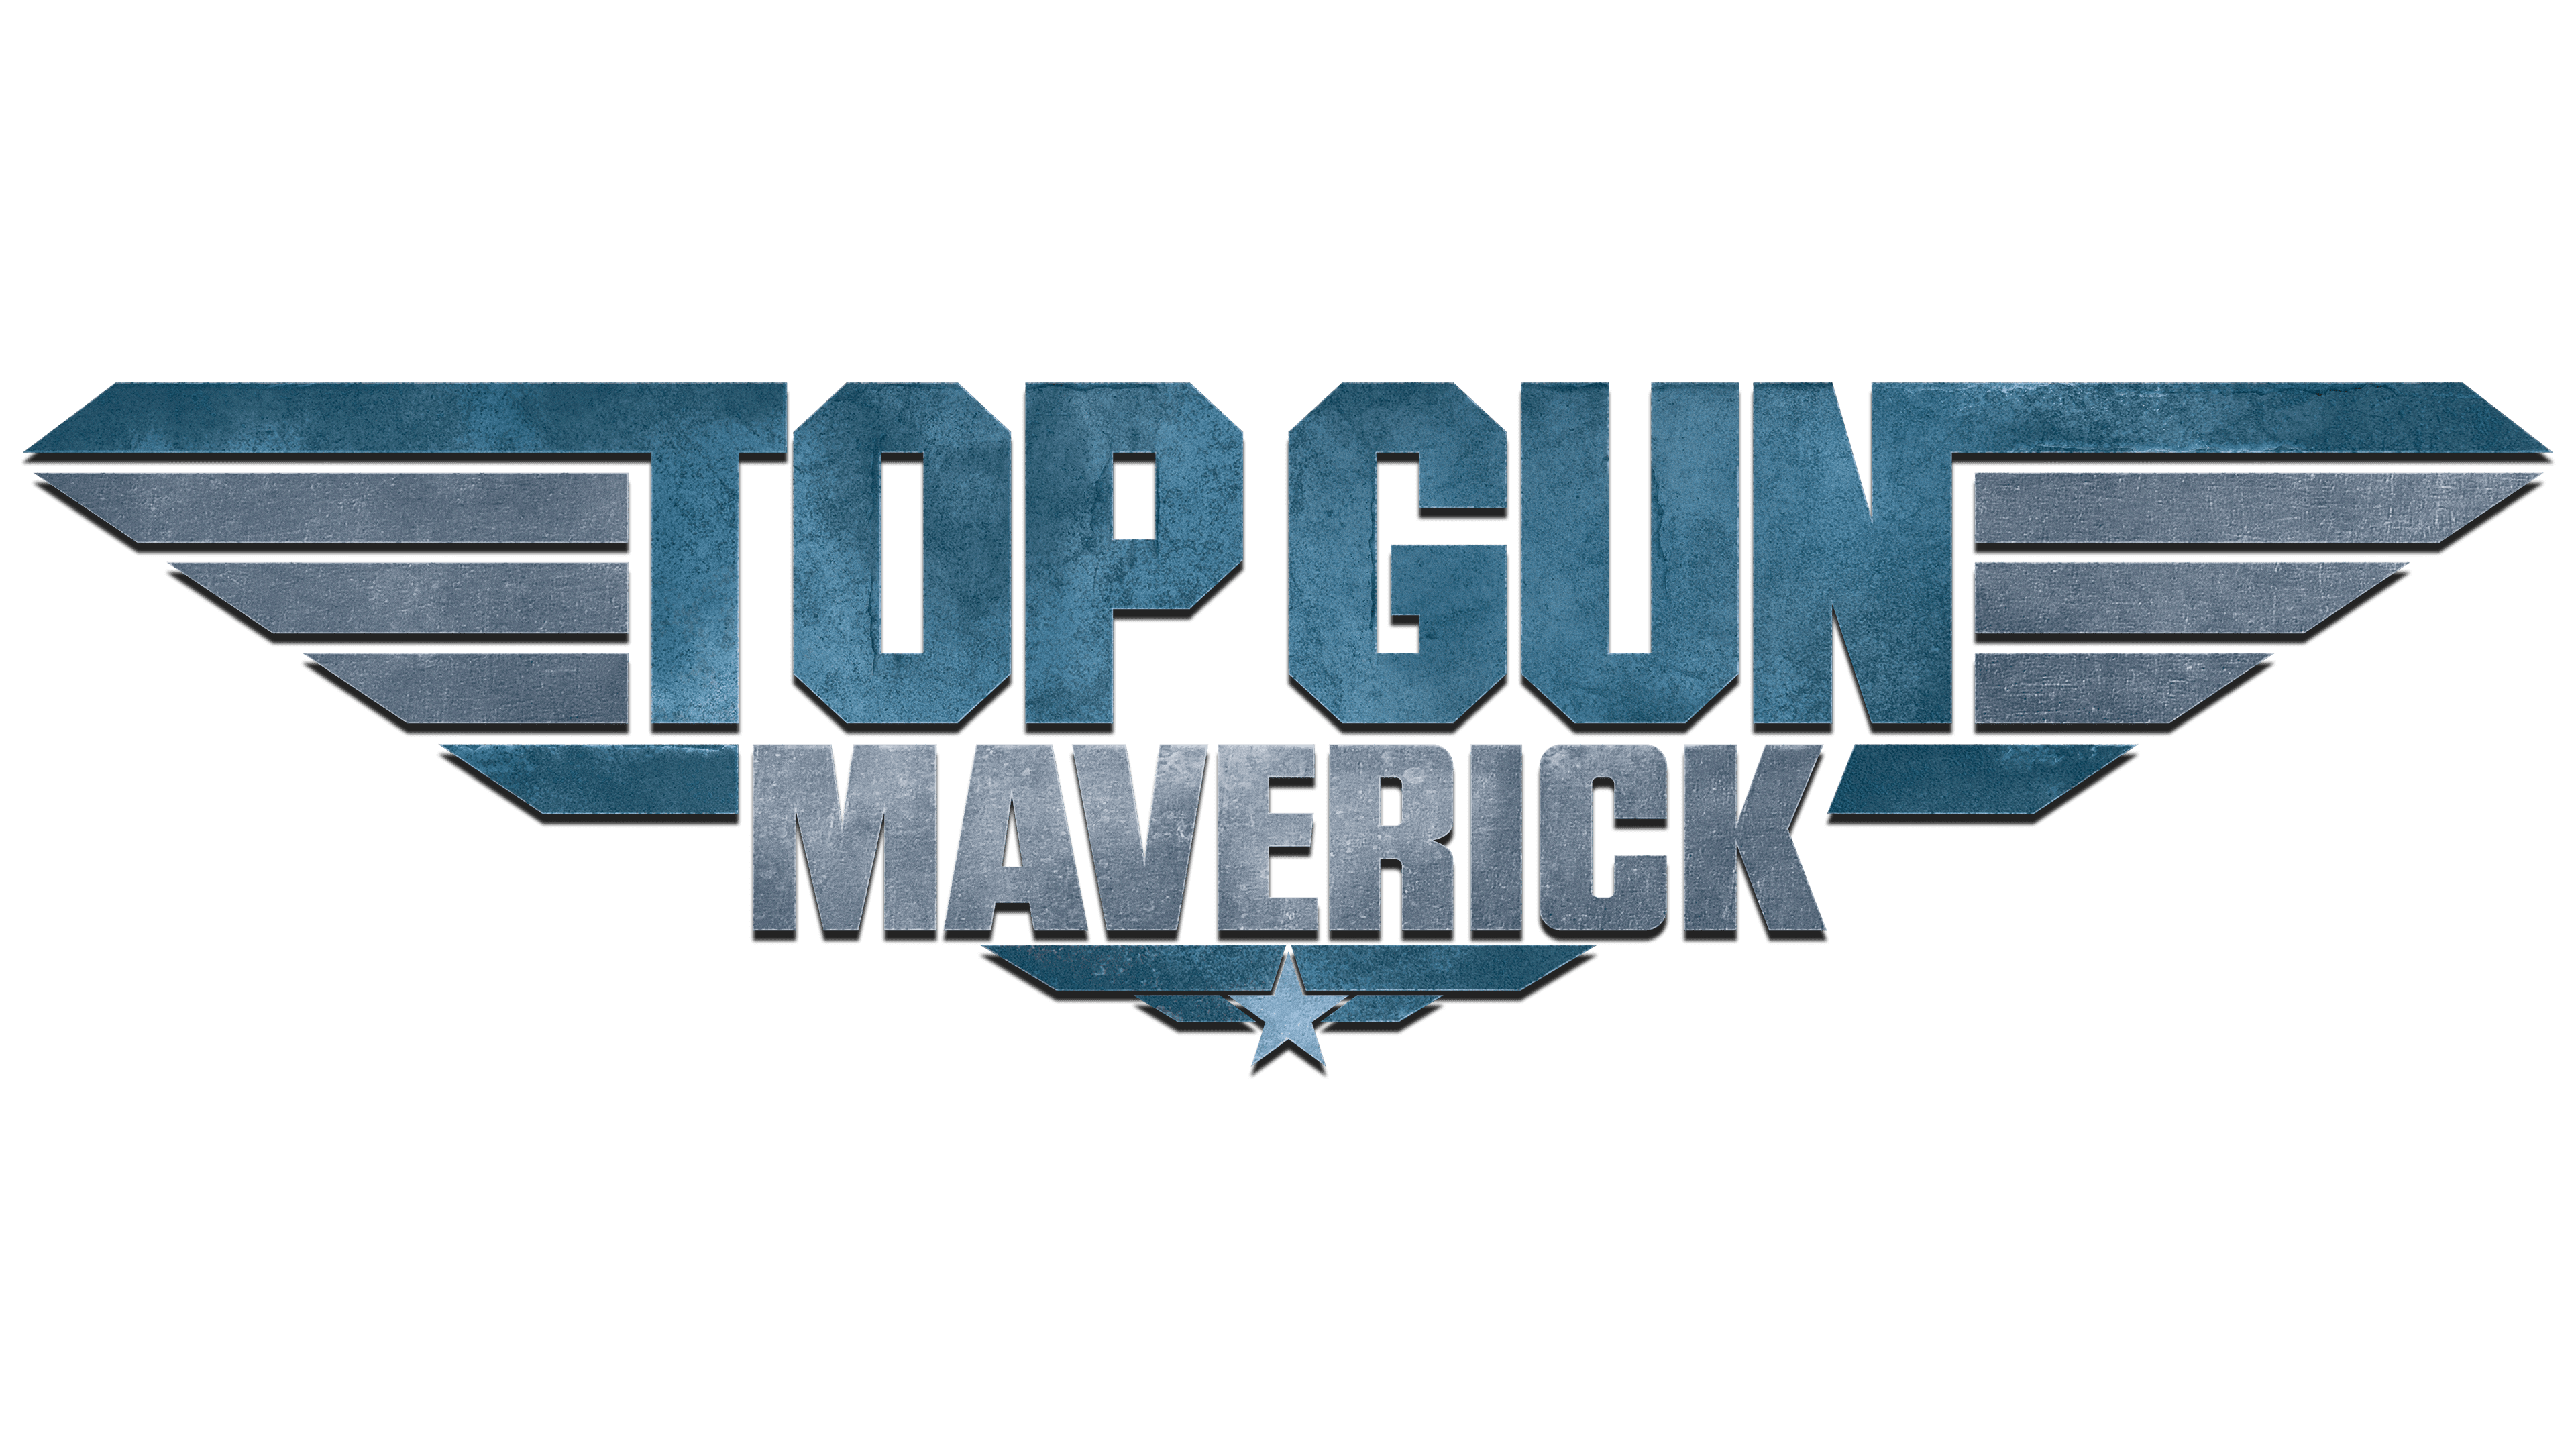 Top Gun Patch Movie Logo Black Yellow Red Star Maverick | eBay